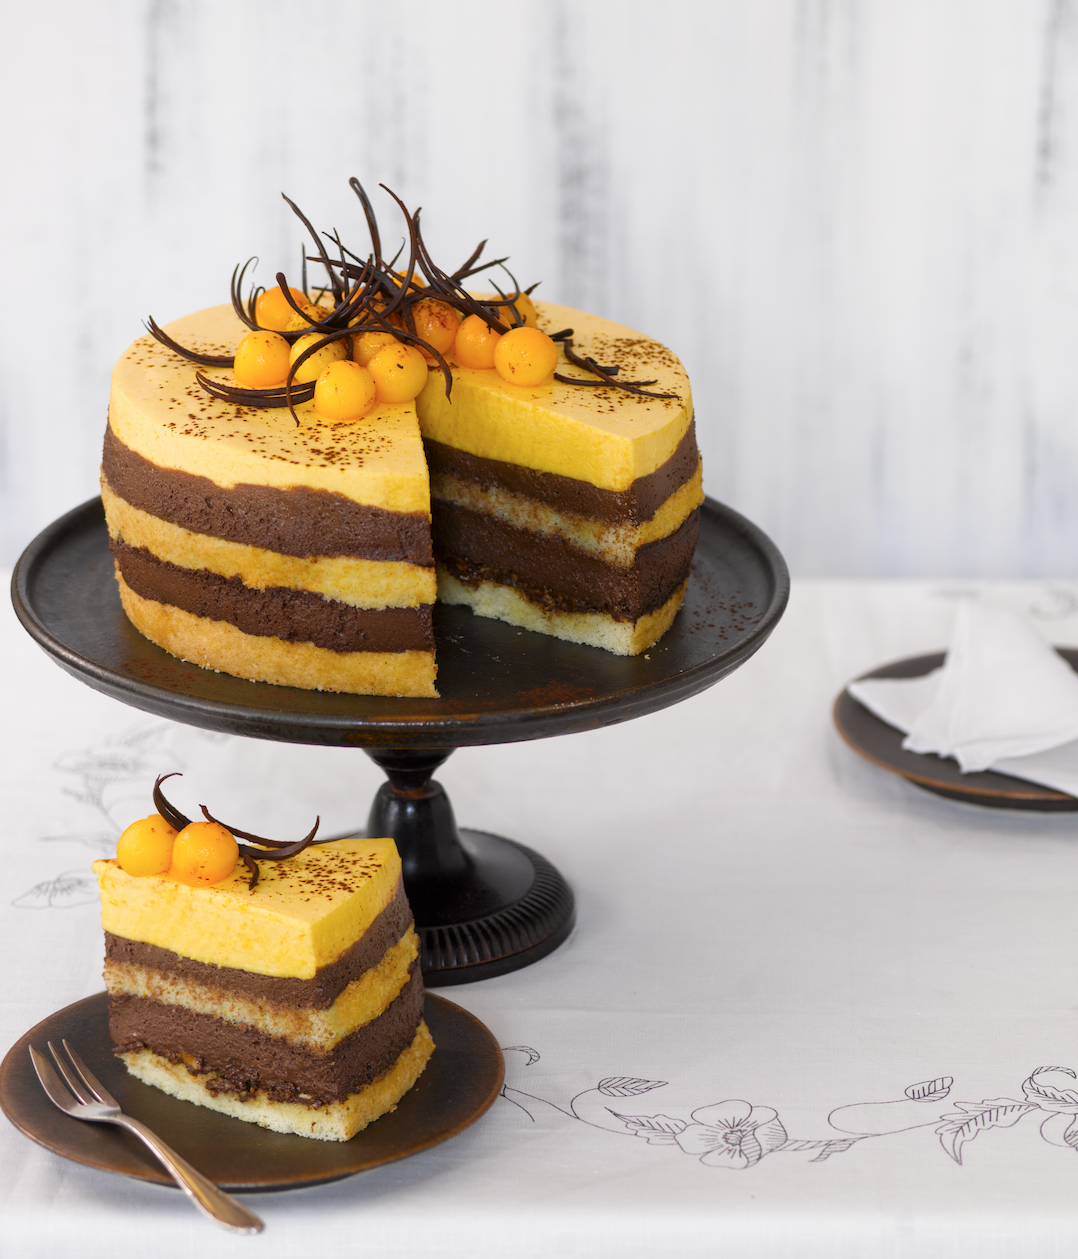 Торт манго-манго с кремом пломбир — рецепт с фото и видео